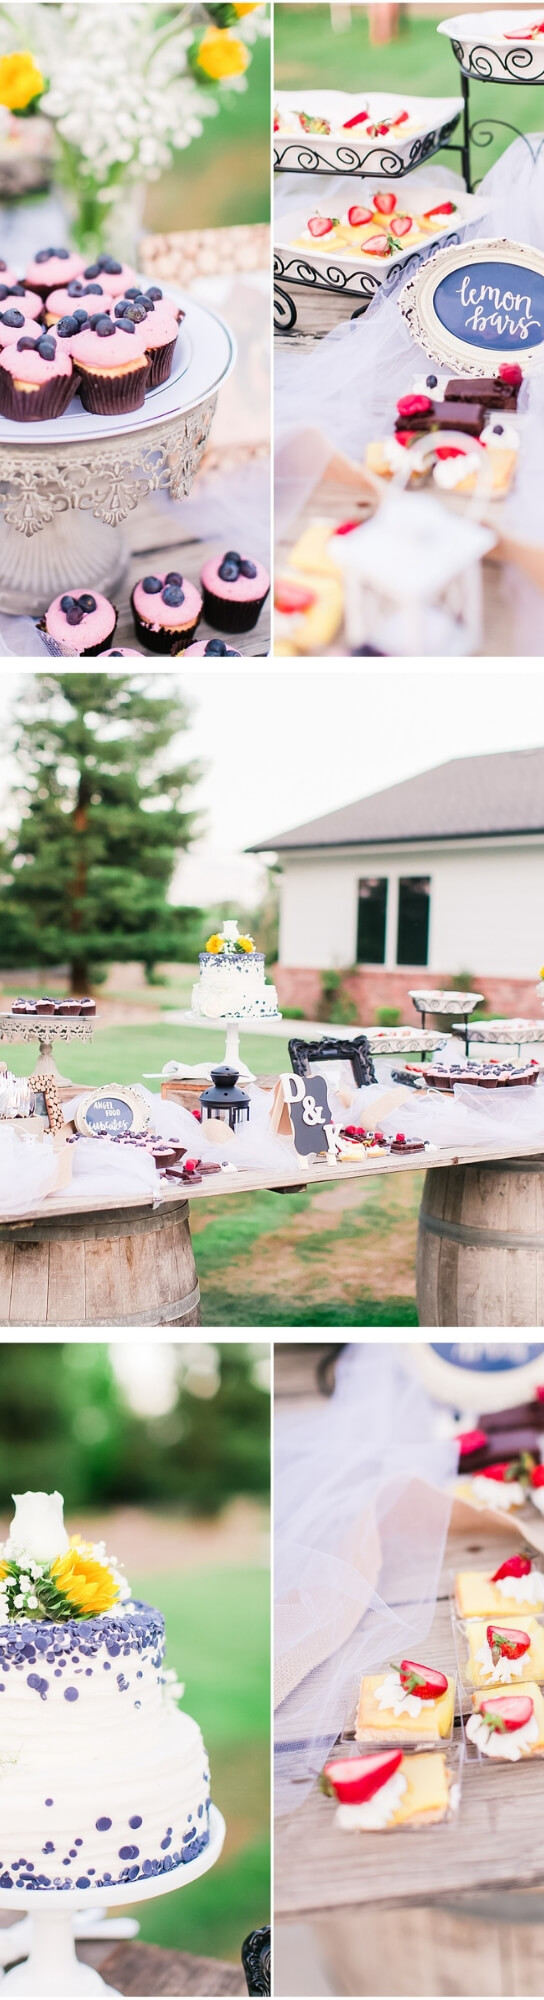 Backyard wedding decor ideas | Creative & Rustic Backyard Wedding Ideas For Summer & Fall